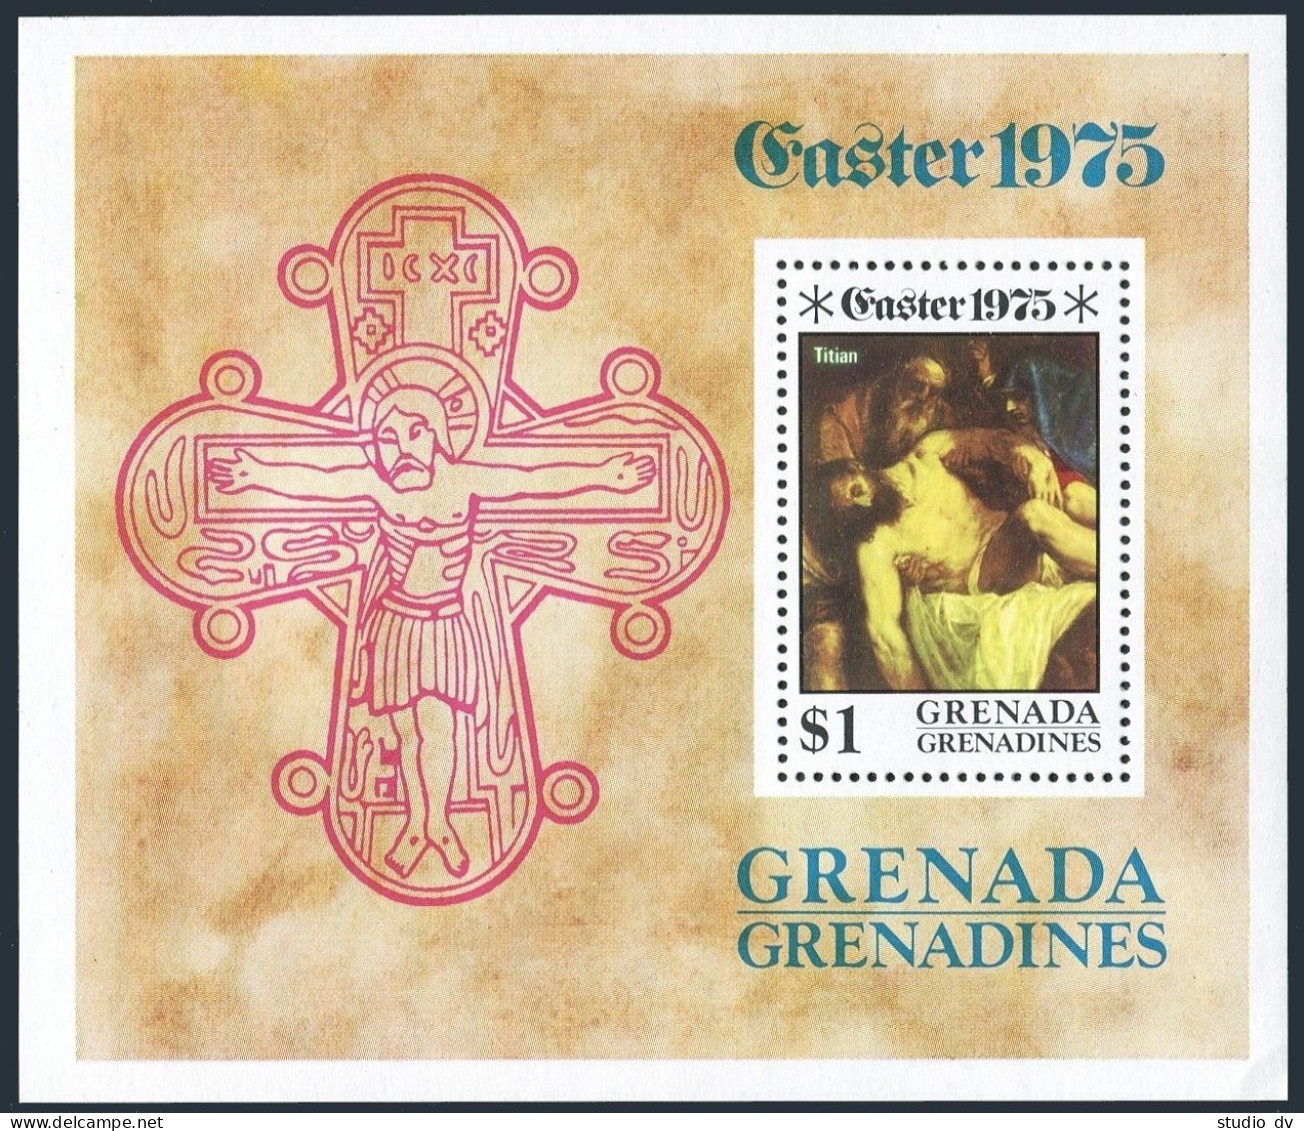 Grenada Gren 66,MNH. Michel 70 Bl.8. Easter 1975.Crucifixion,by Titian. - Grenade (1974-...)